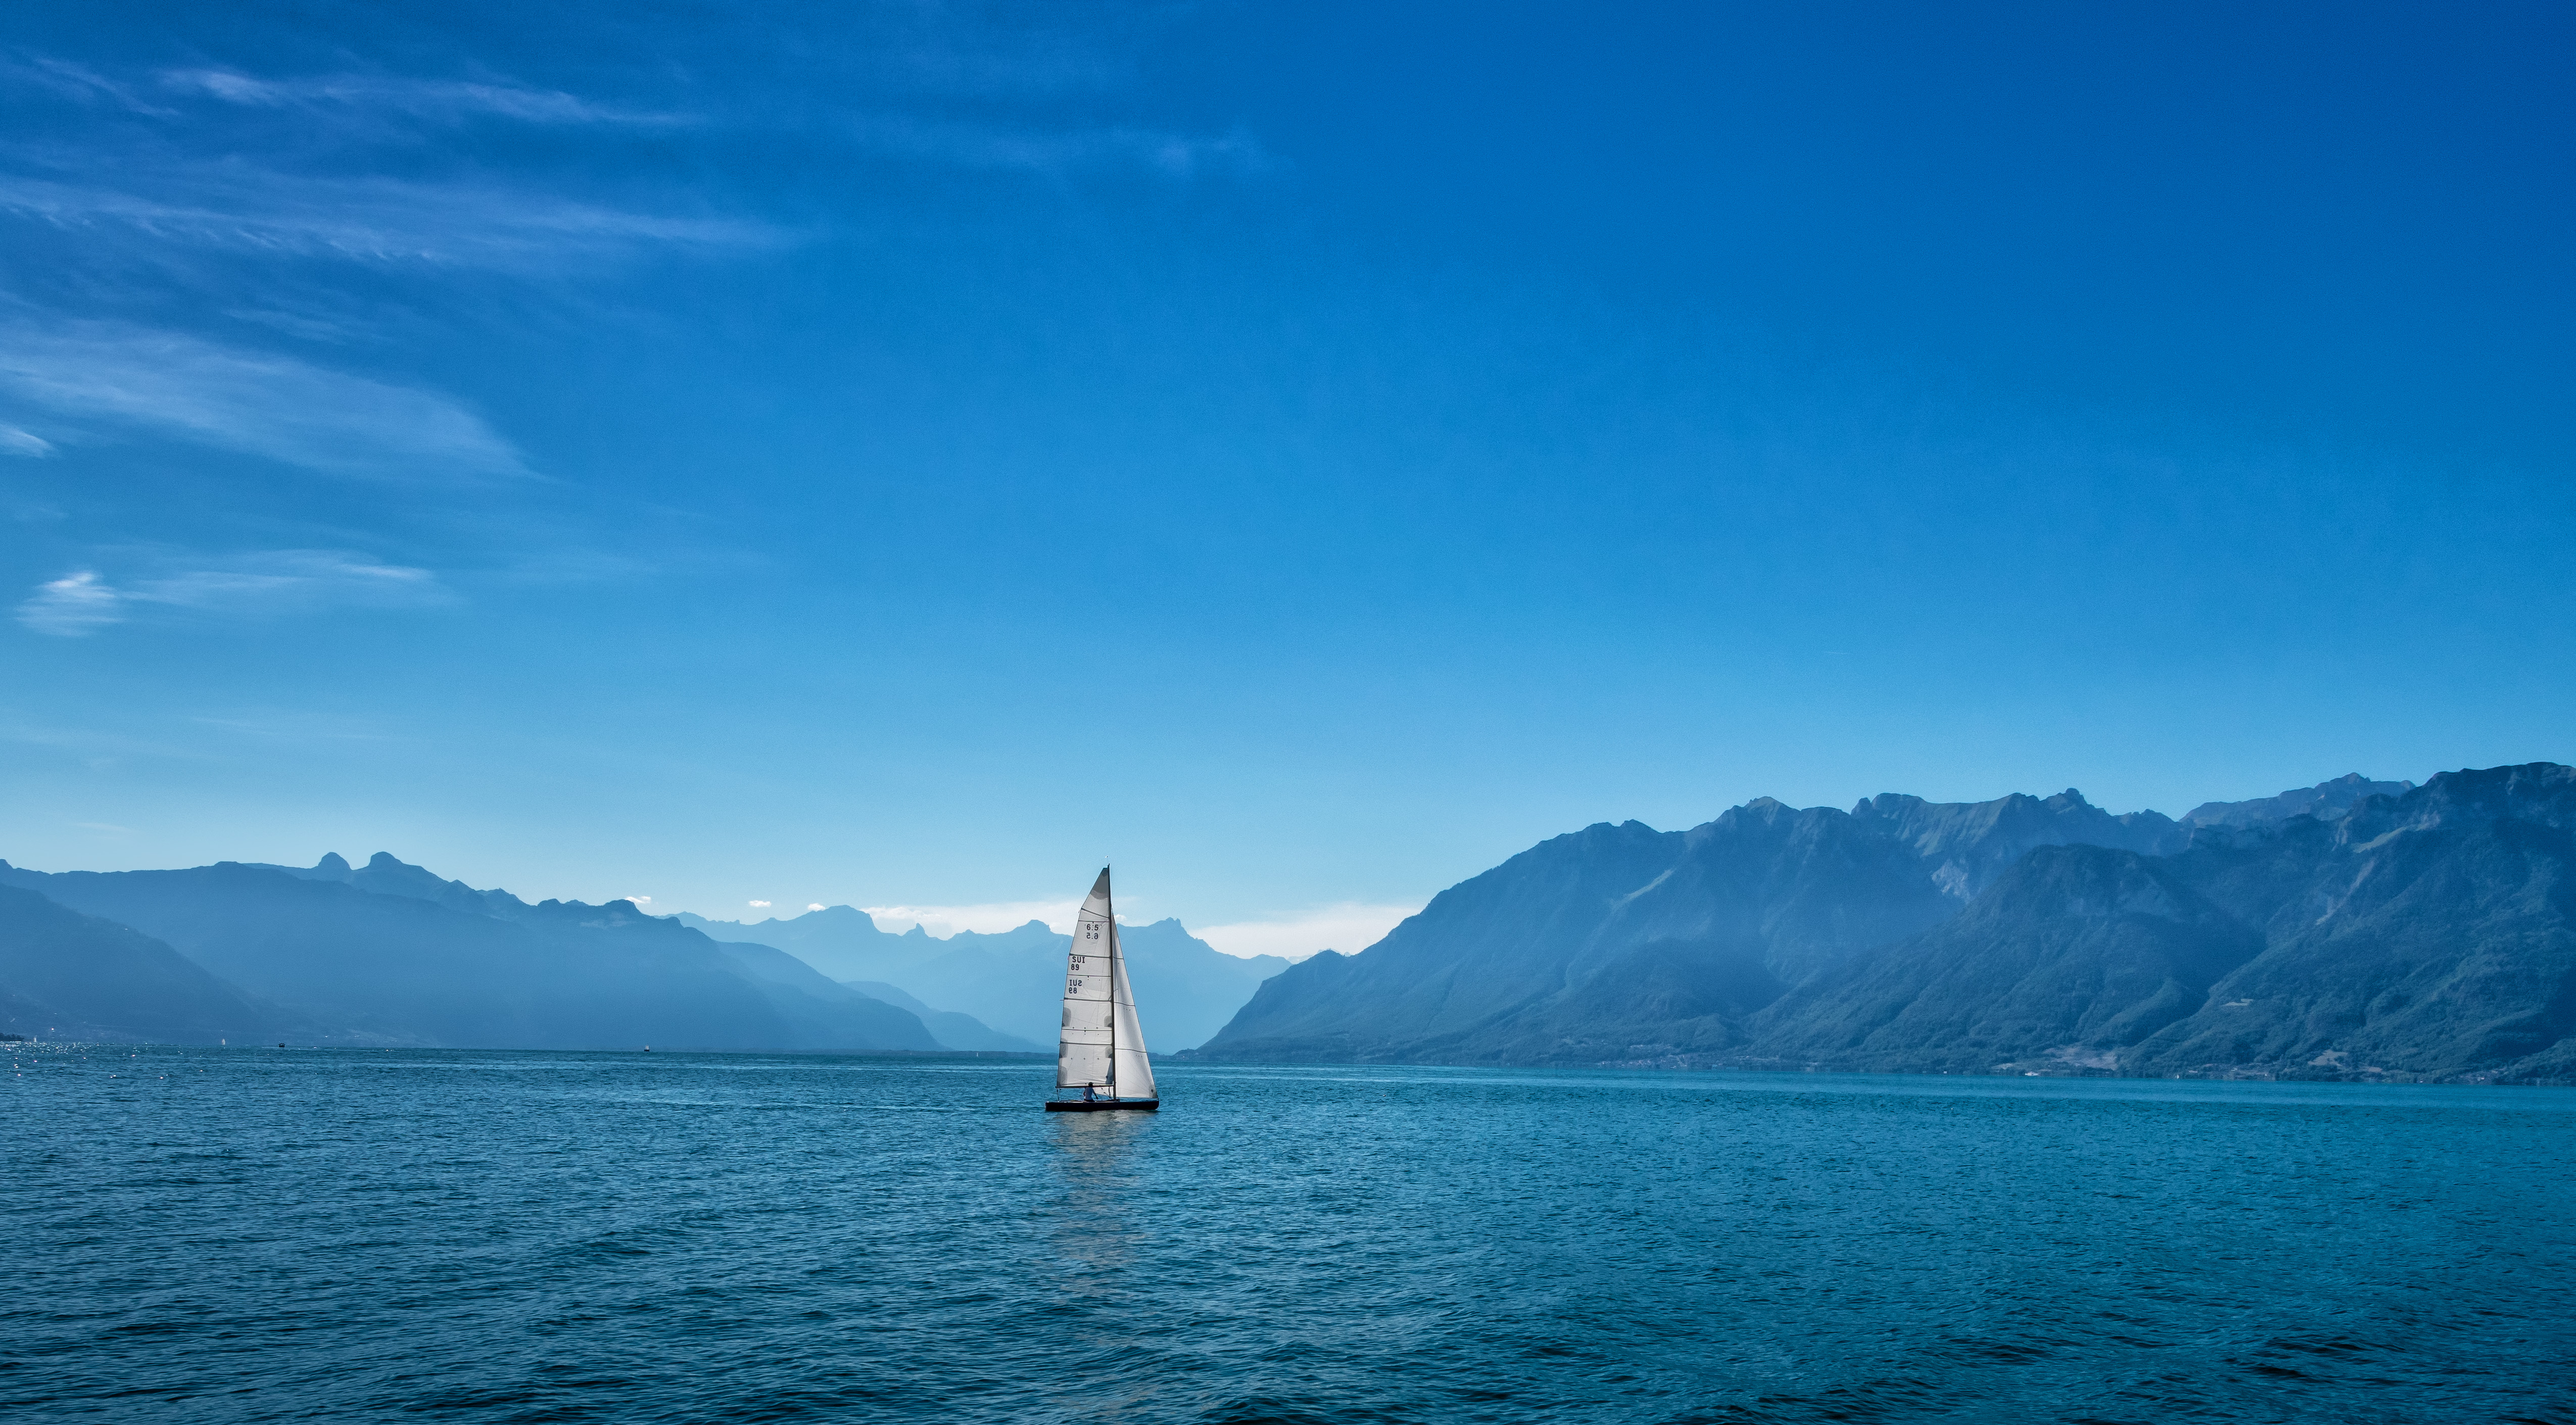 nature, sea, mountains, sailboat, sailfish, ship lock screen backgrounds